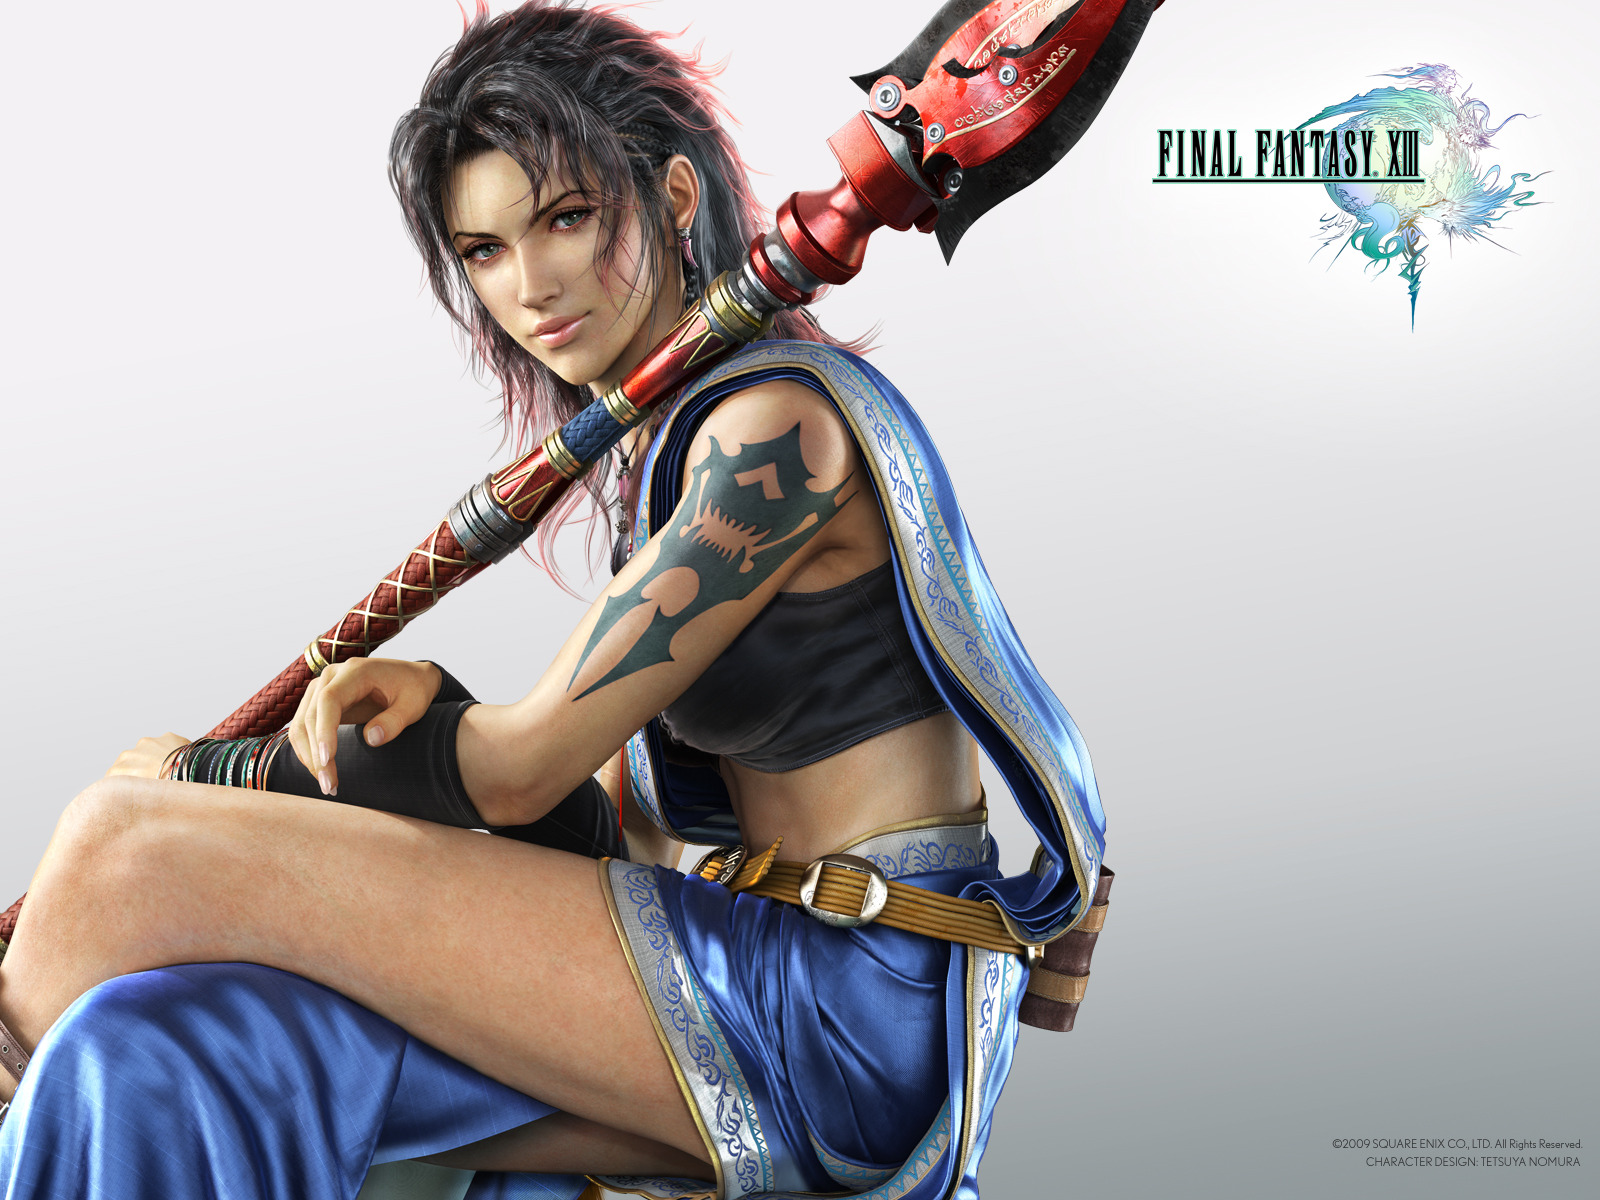 Ff Mania Character Yang Dimainkan Dalam Final Fantasy Xiii